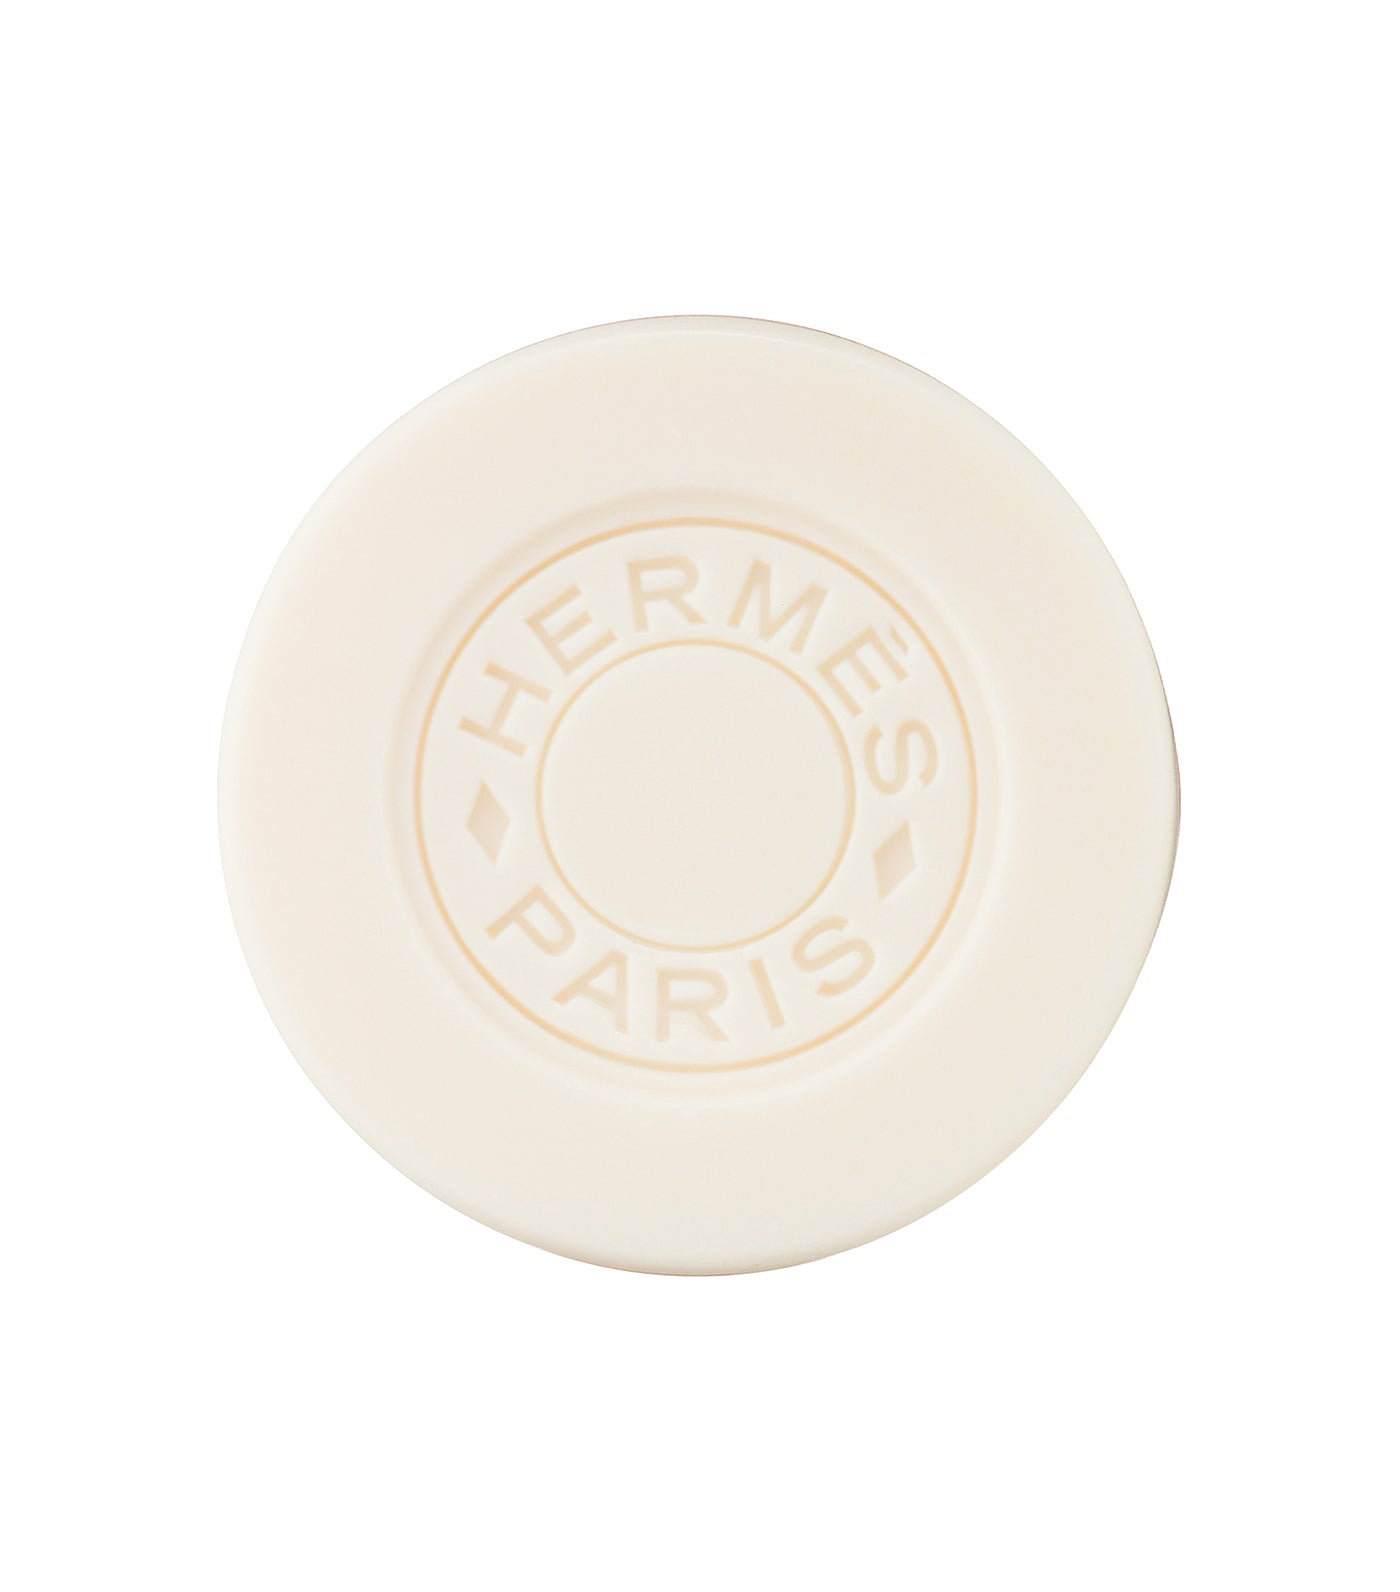 Twilly d'Hermès, Perfumed soap, 100 g